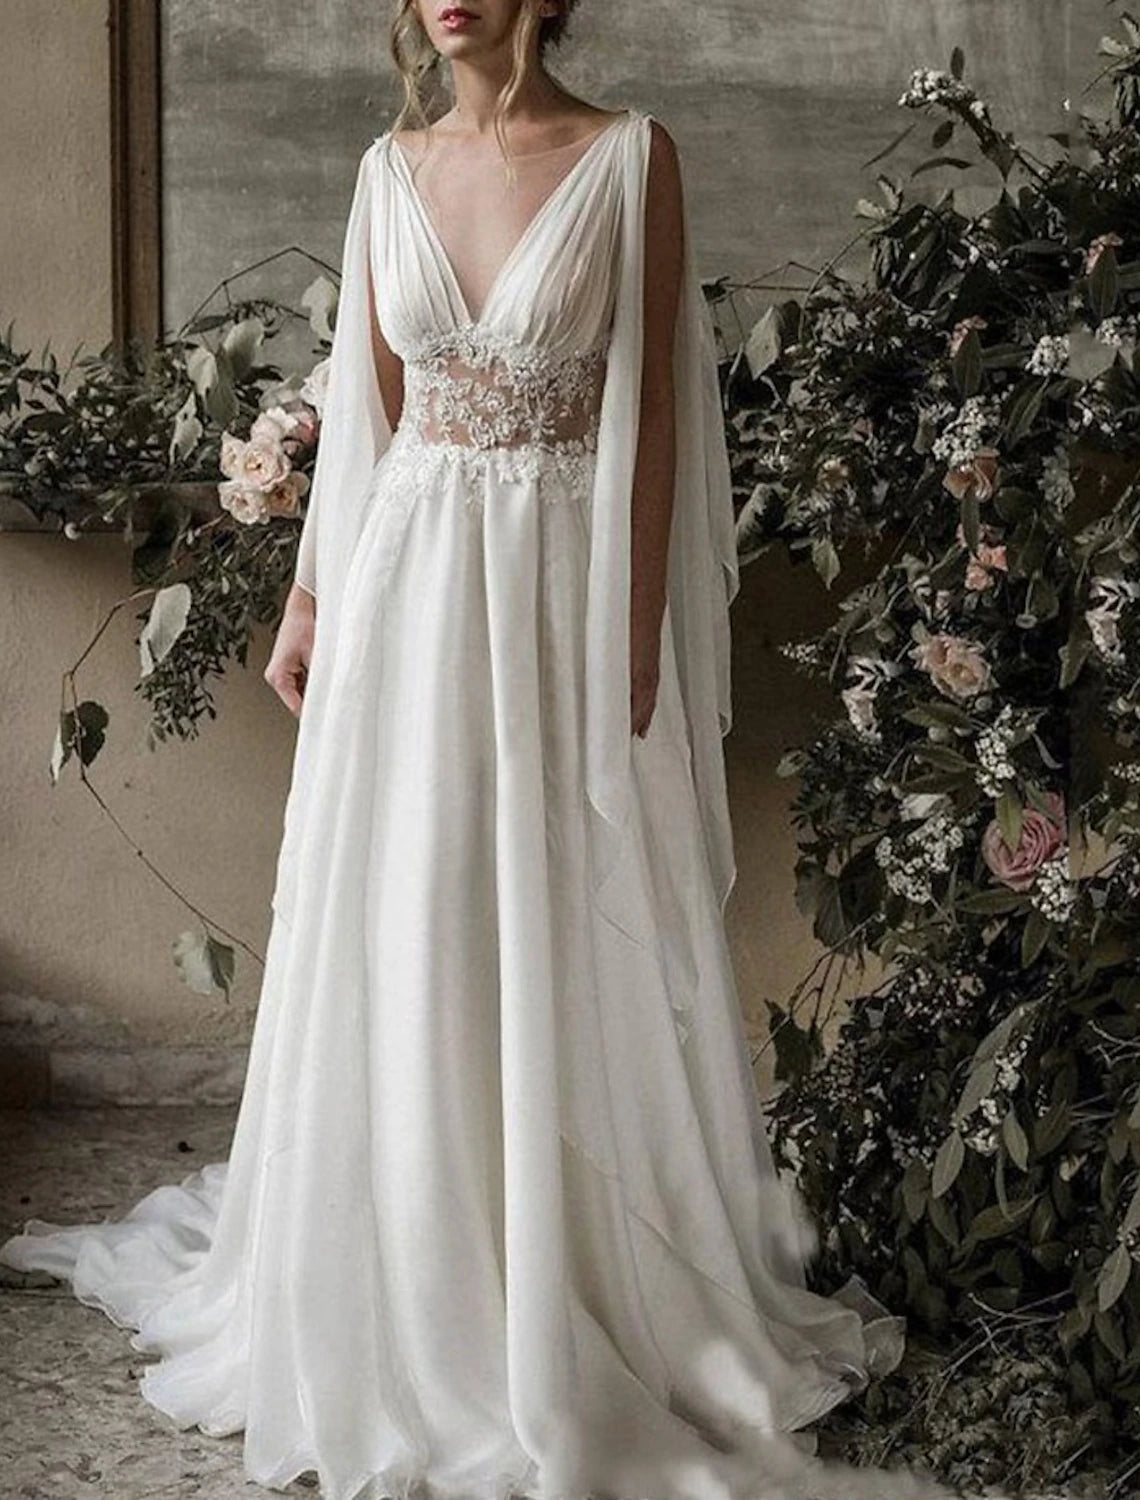 Simple Wedding Dresses Wedding Dresses A-Line V Neck Short Sleeve Tea Length Satin Bridal Gowns With Pleats Solid Color